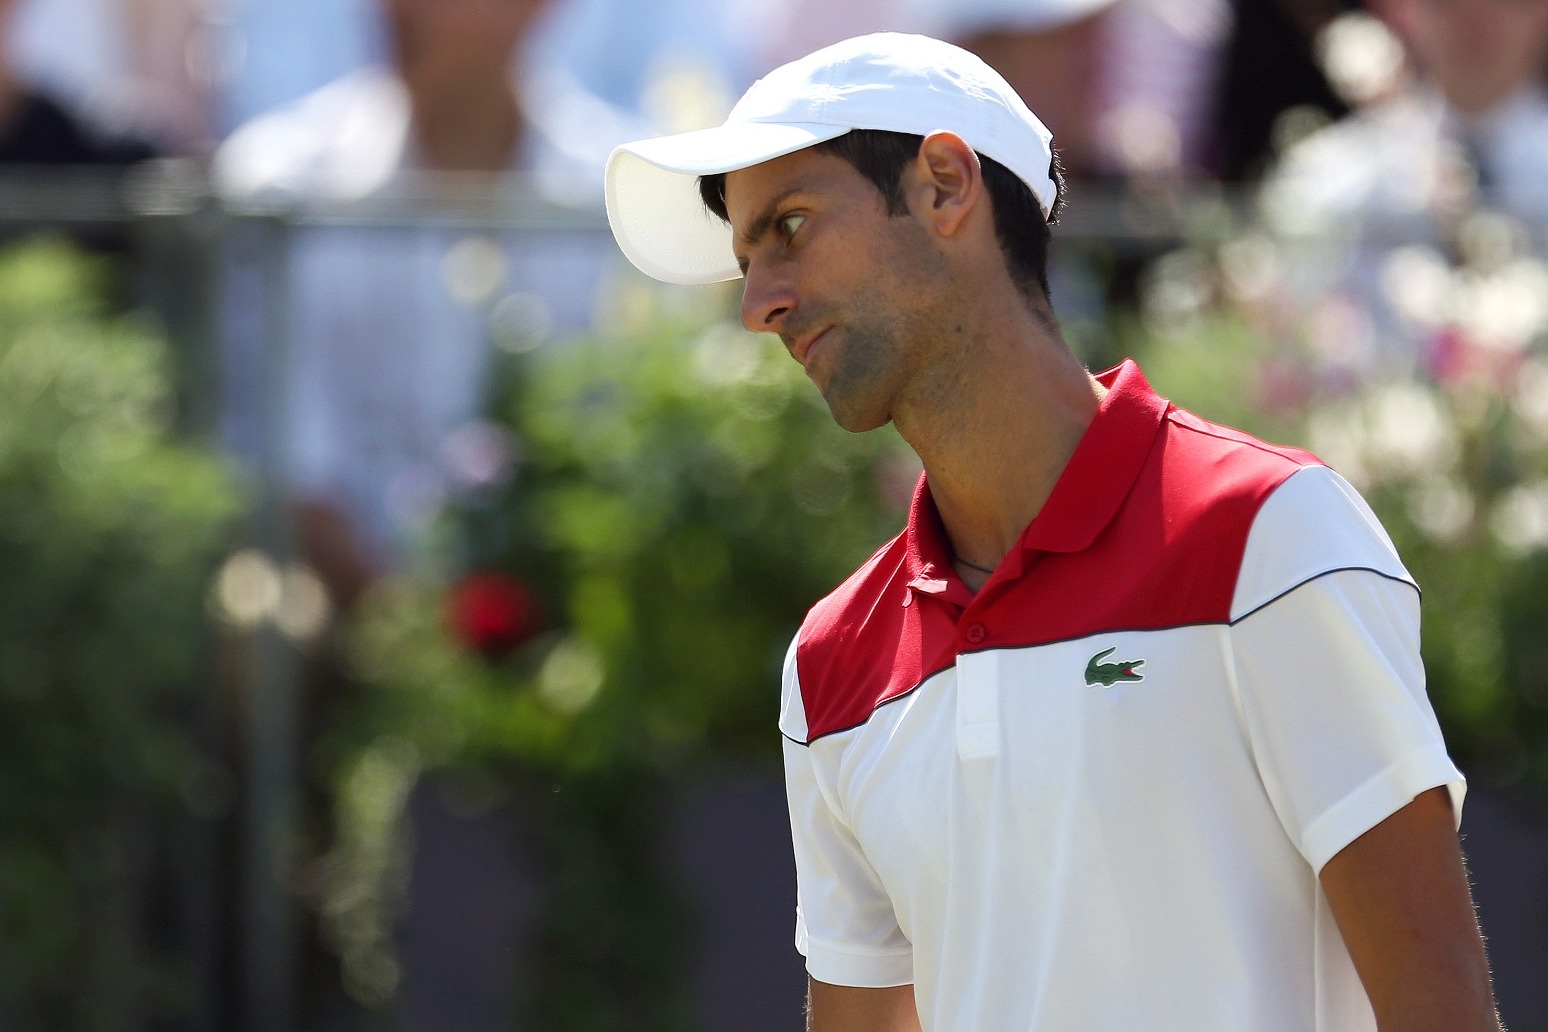 Novak Djokovics Australian visa cancelled by countrys Immigration Minister